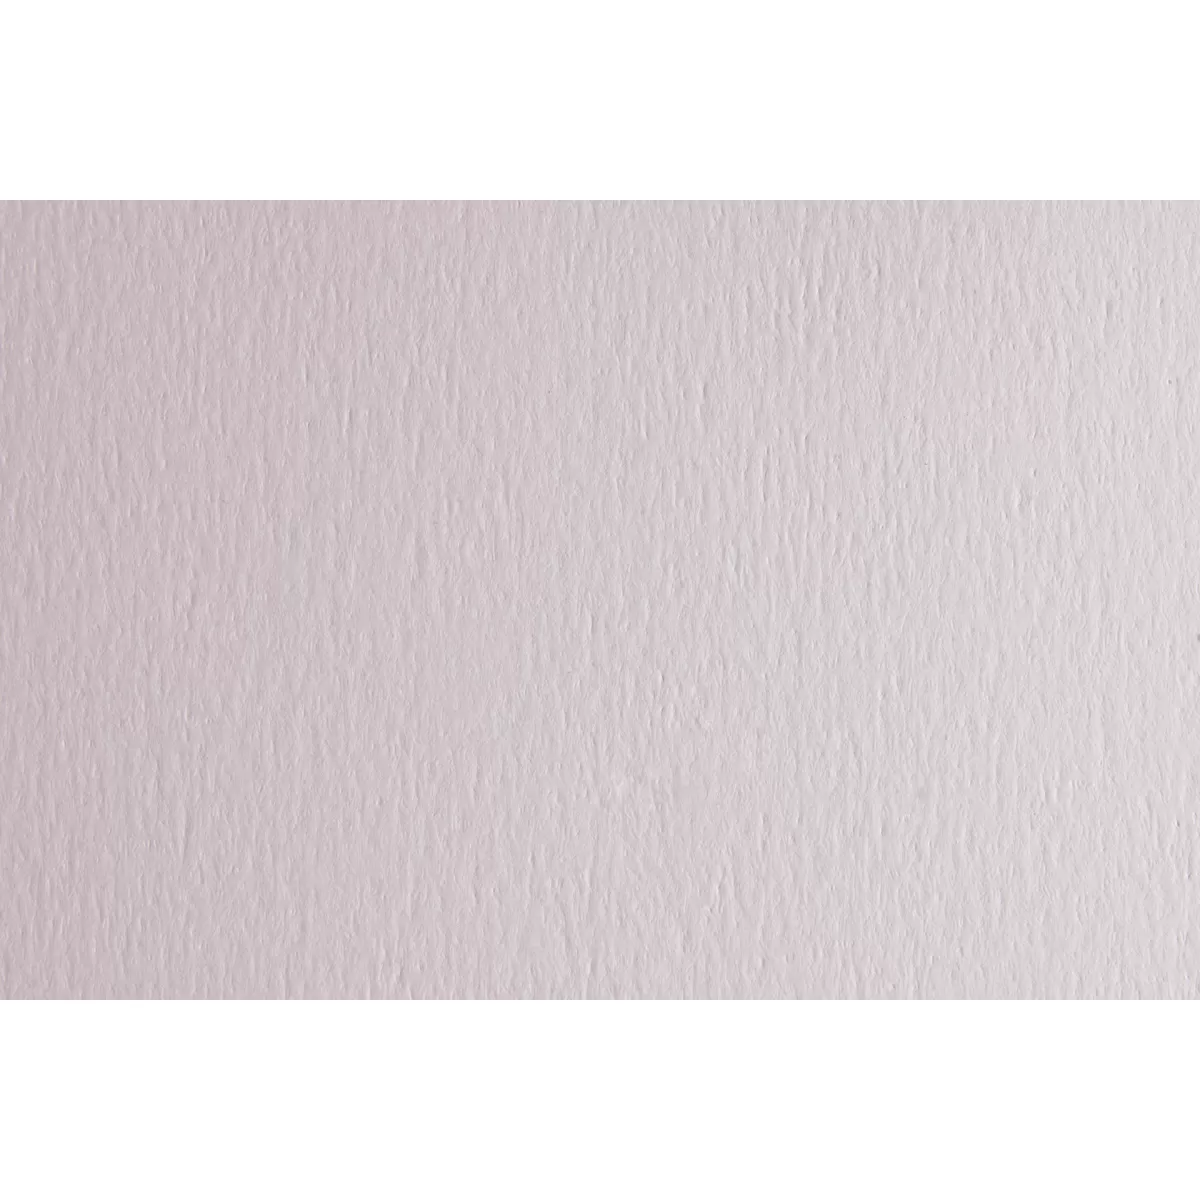 Fabriano Картон Colore, 50 x 70 cm, 140 g/m2, № 220, бял